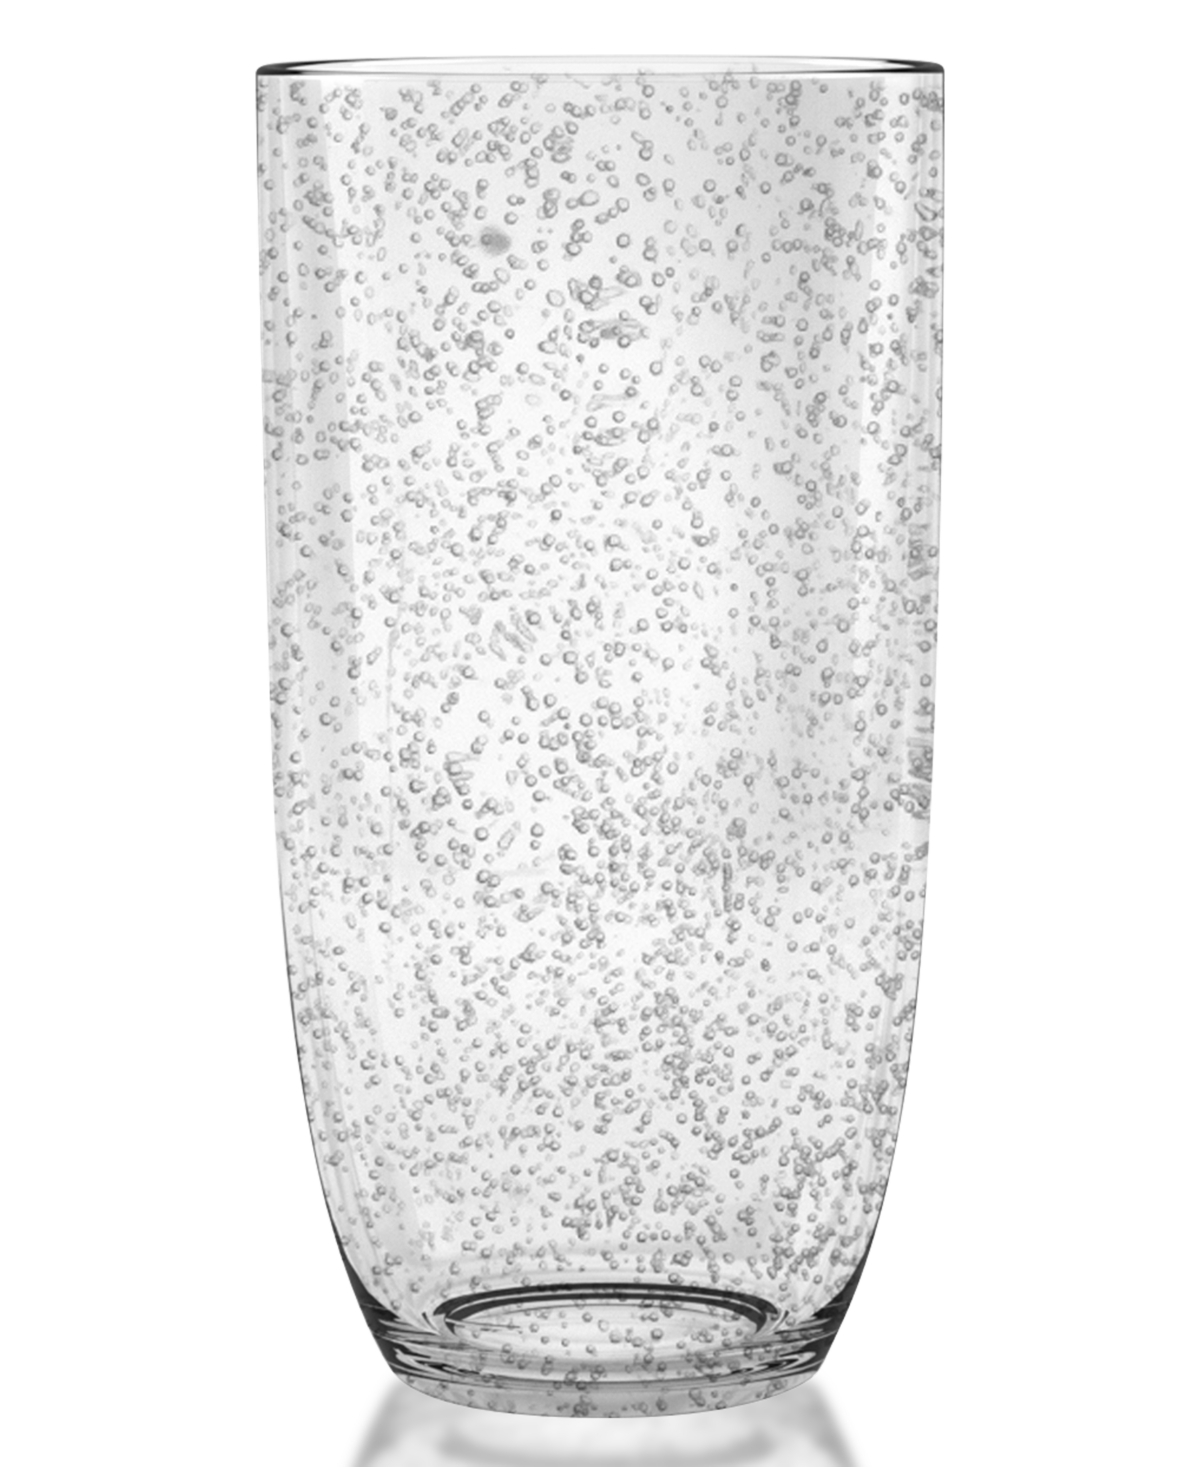 Bubble Jumbo Glass, Clear, 23 oz., Premium Plastic, Set of 6 - Clear